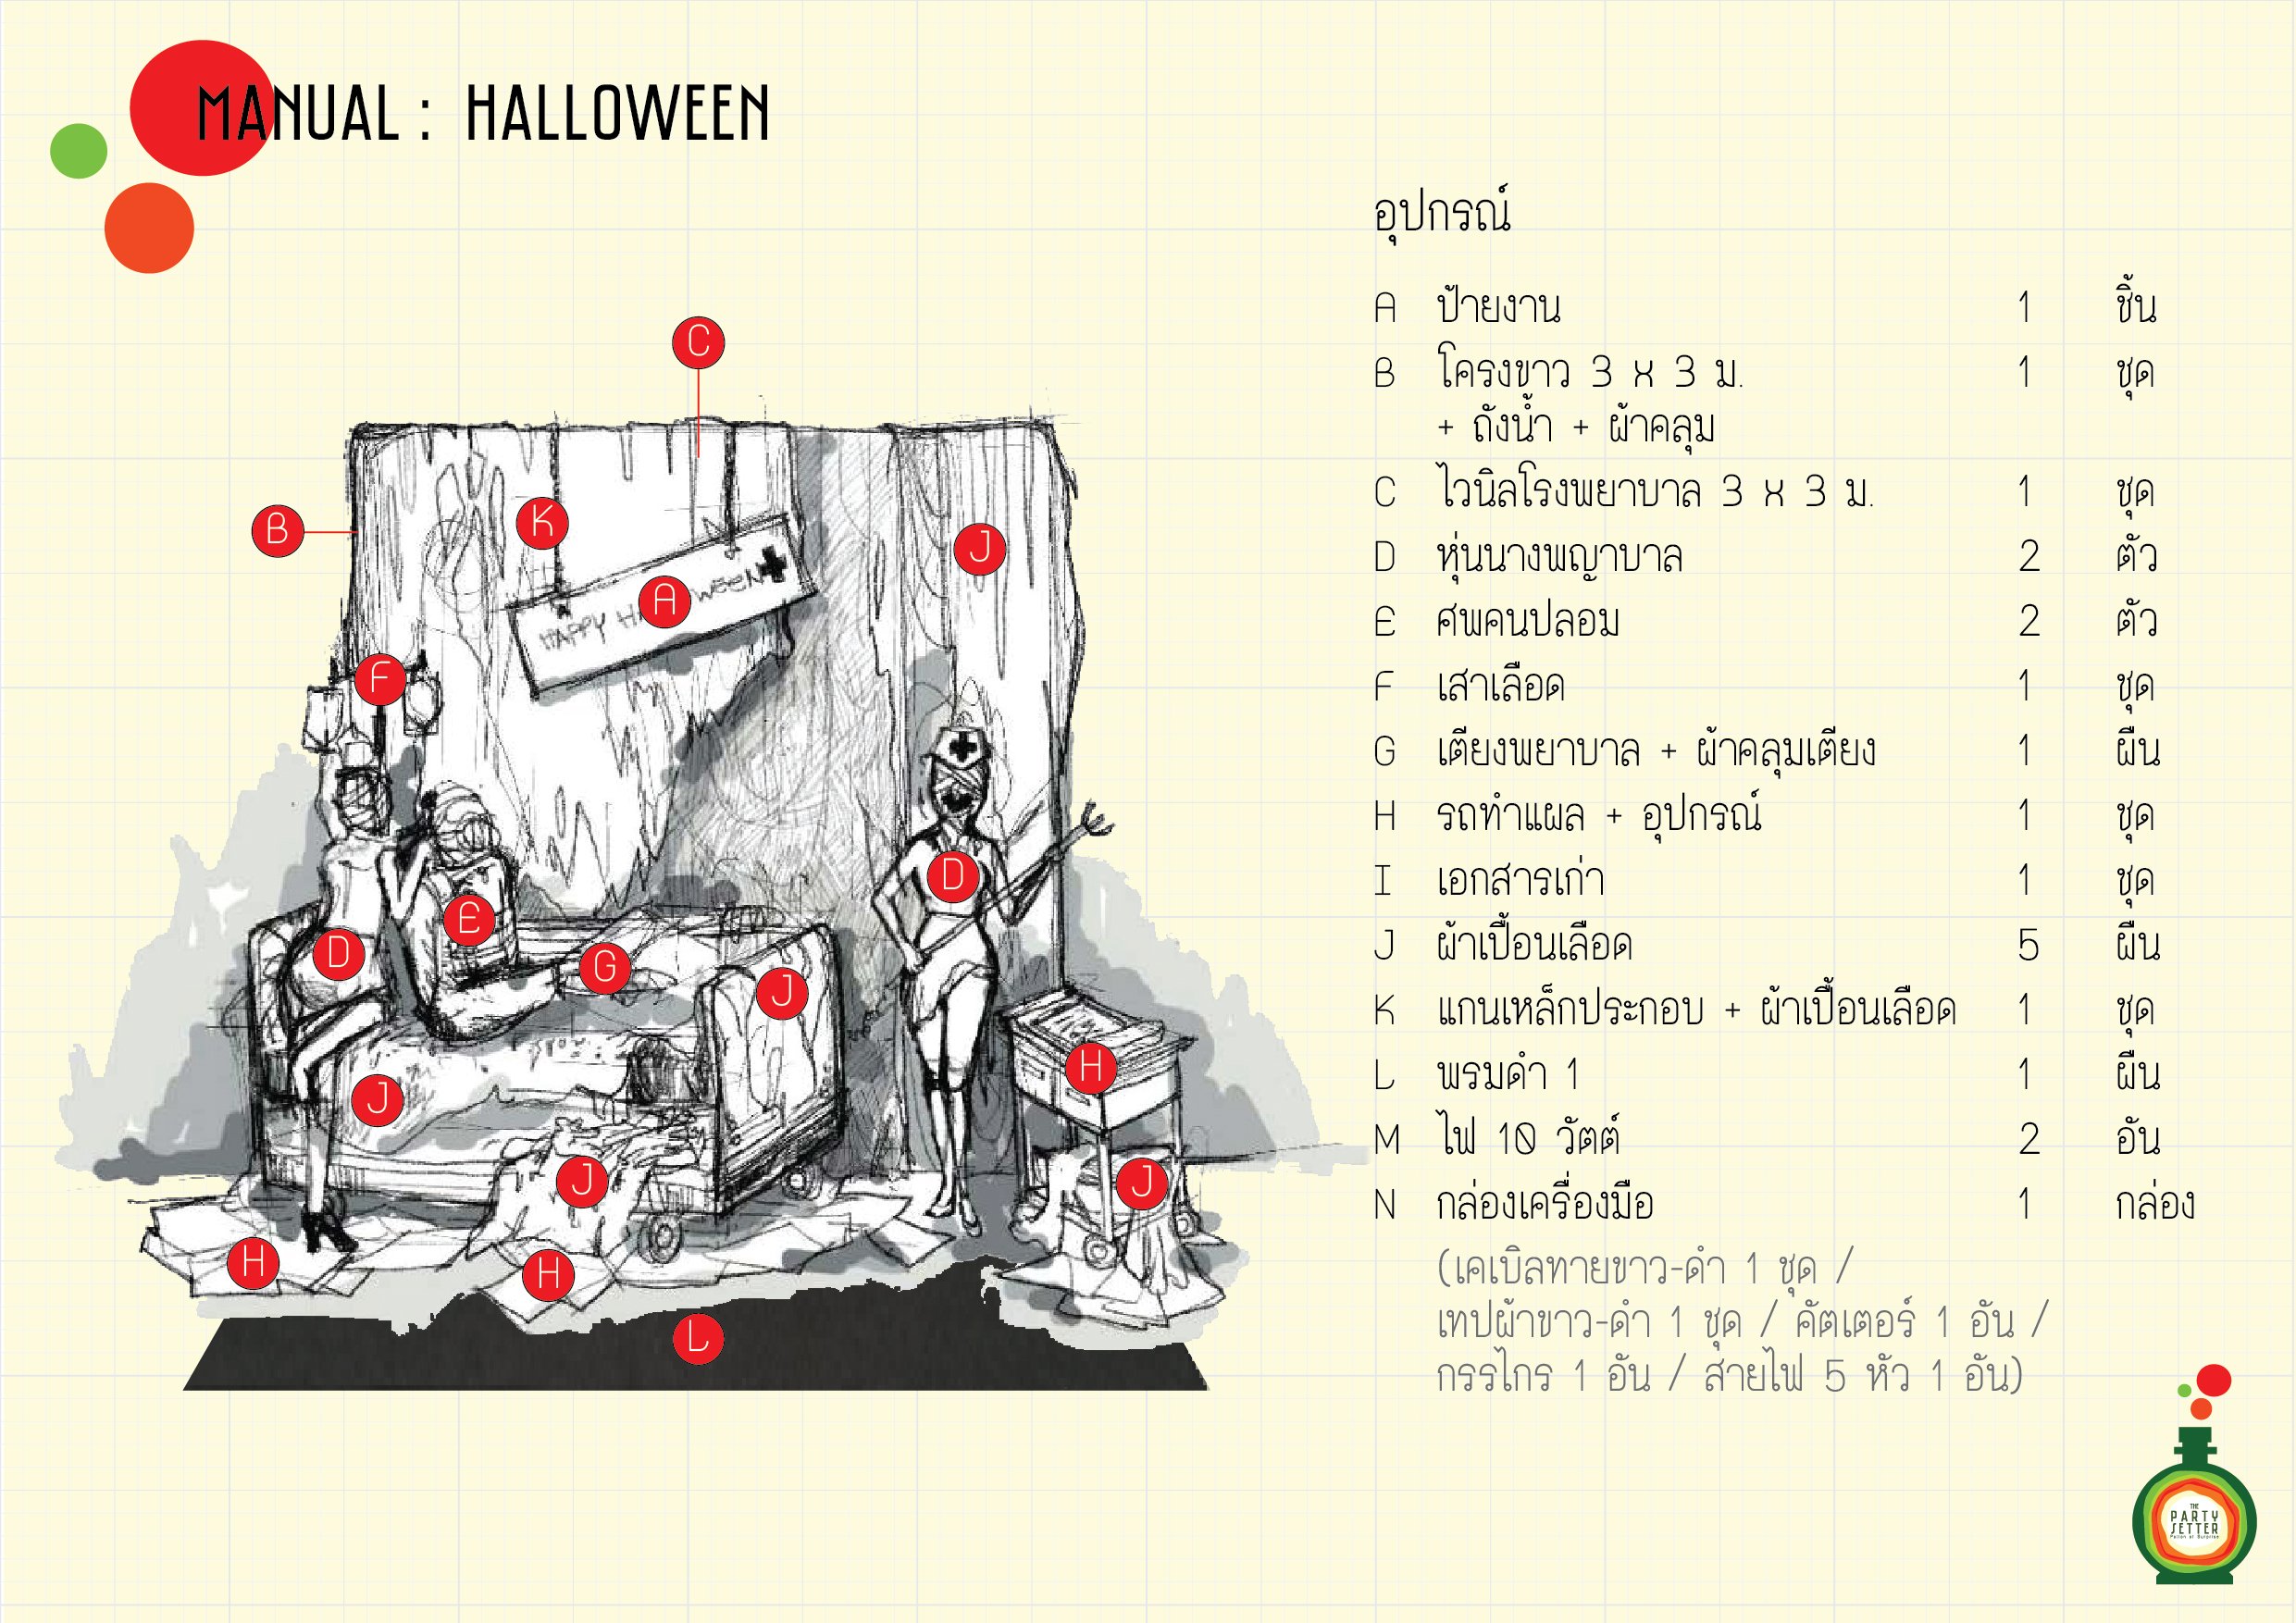 Manual_Halloween_14-00-01.jpg